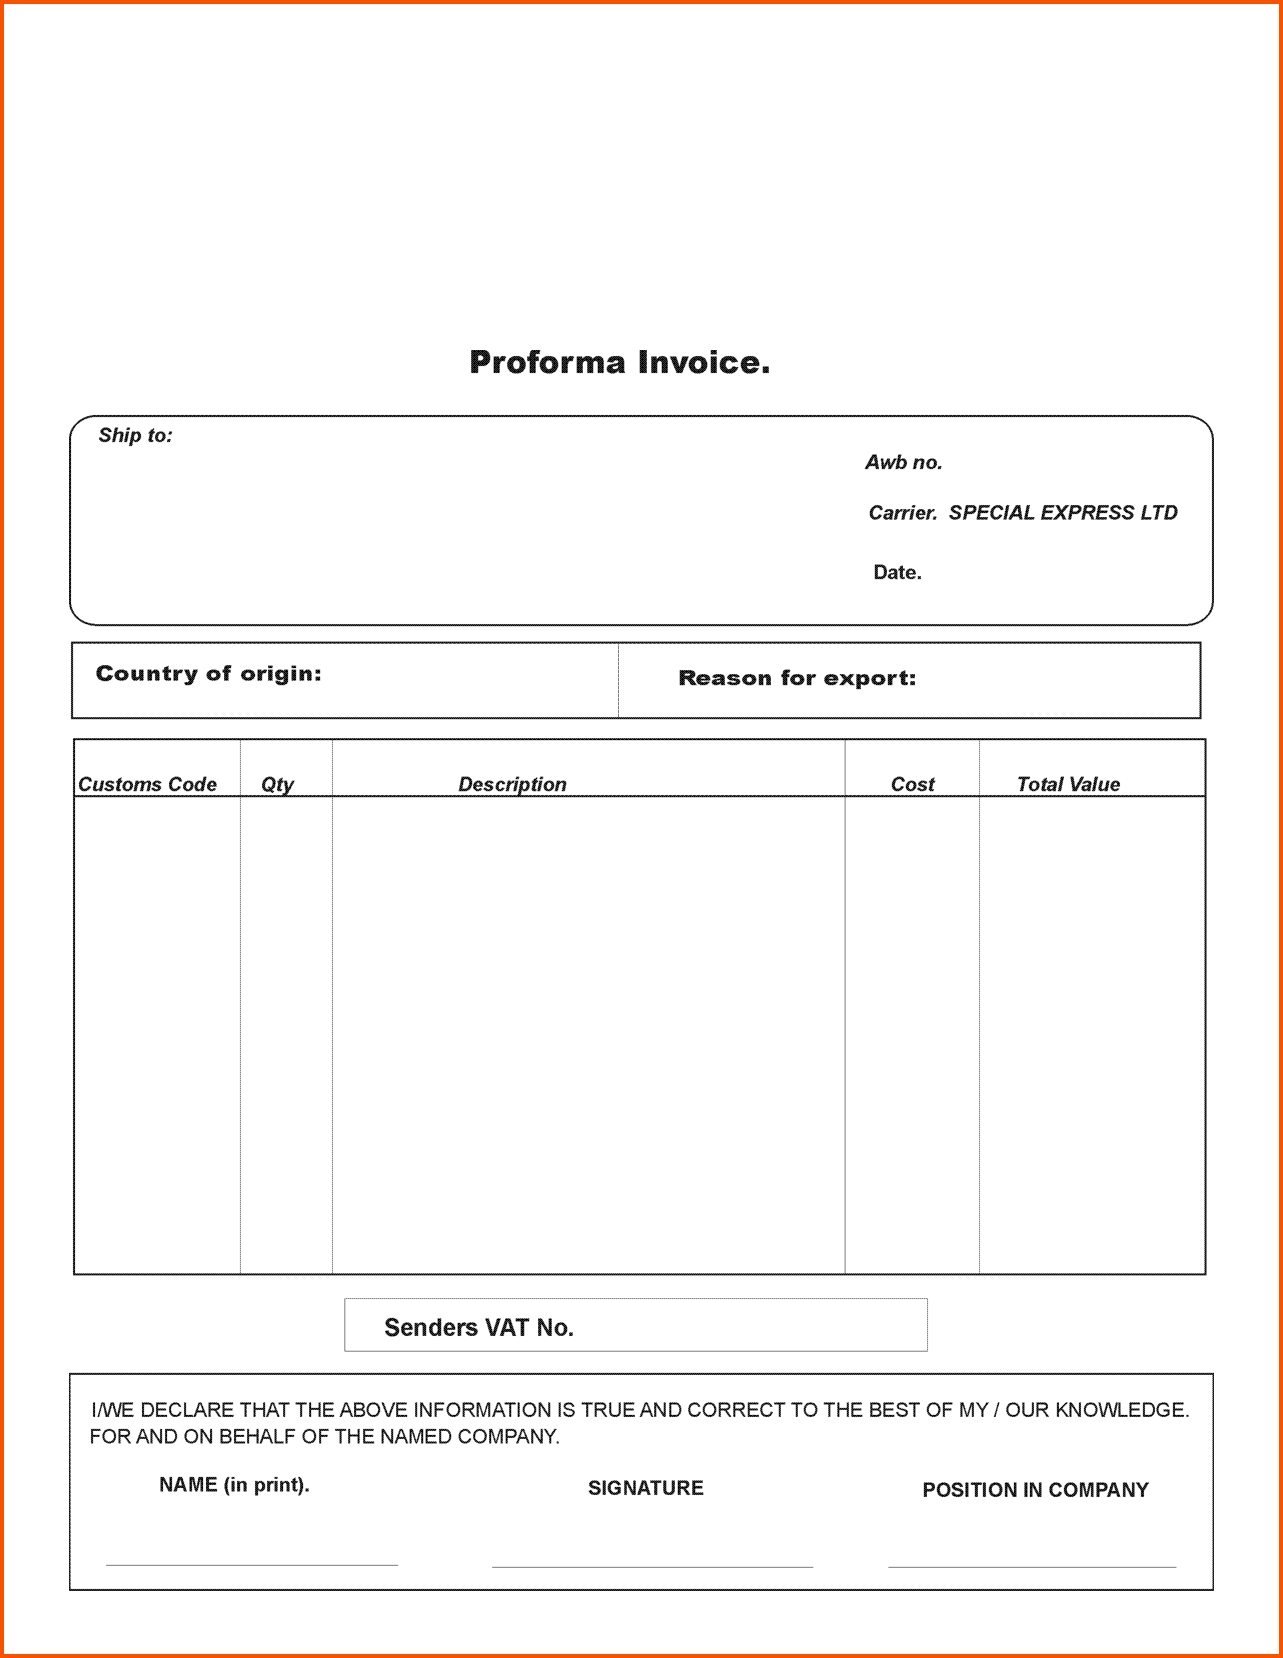 proforma invoice sample 7509813 performa invoice format